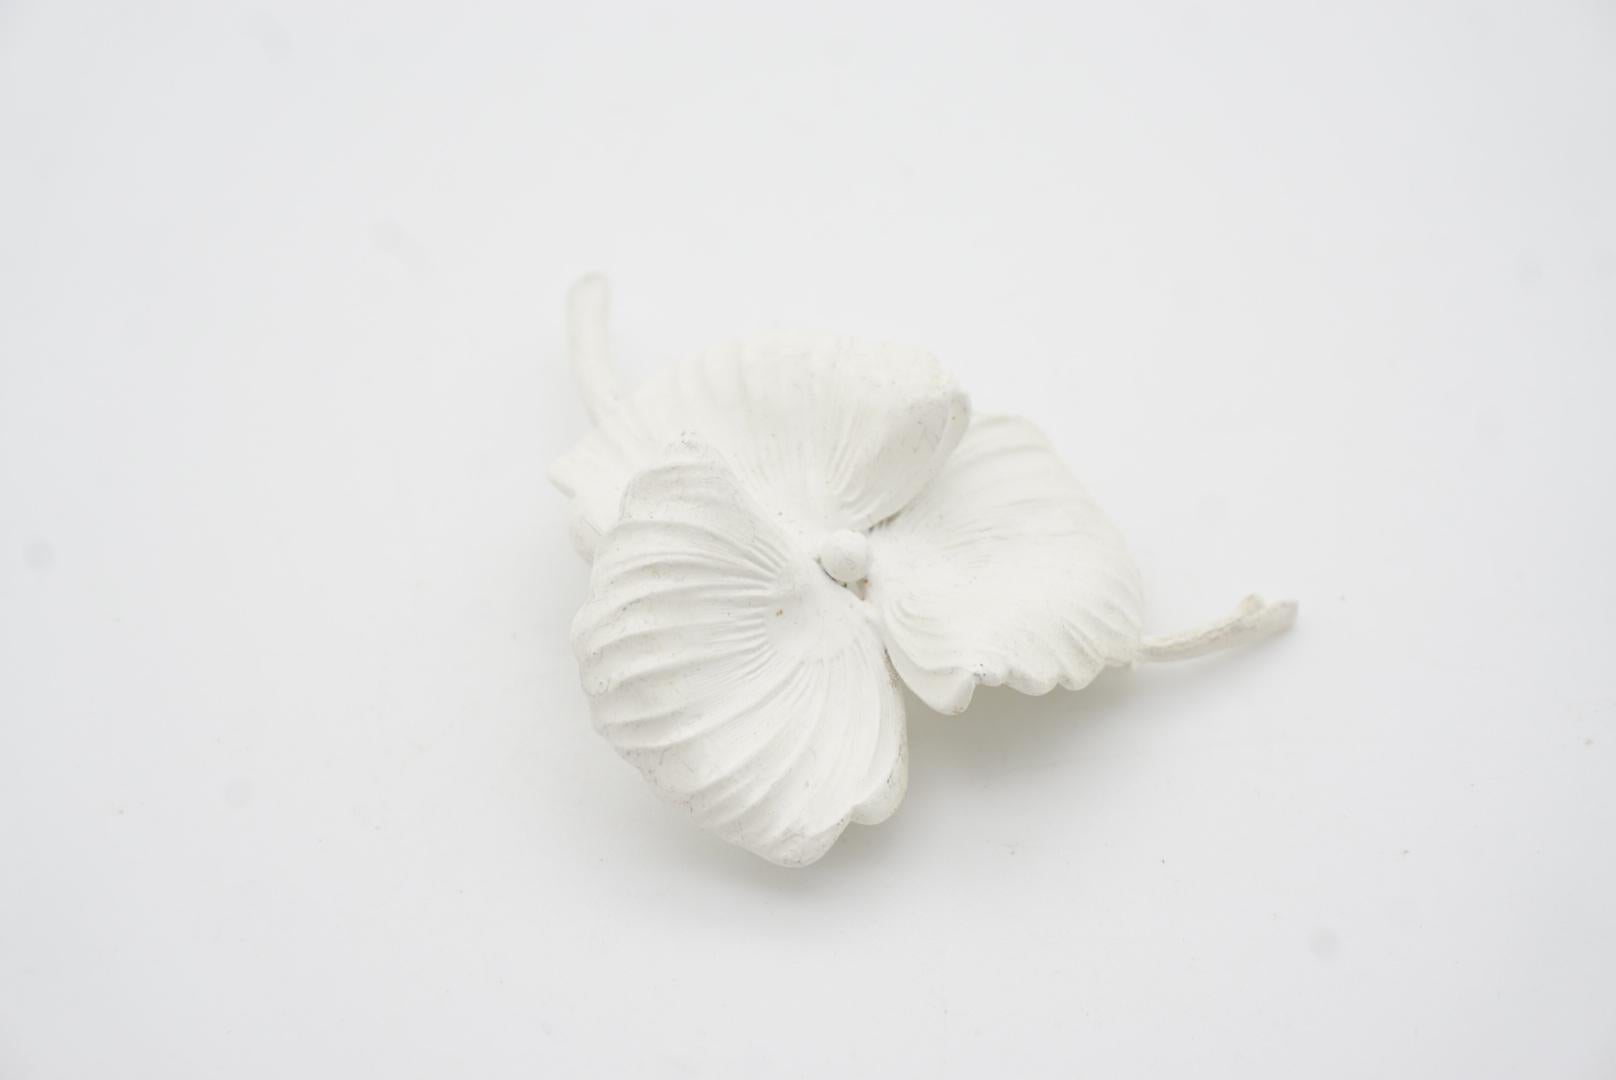 Christian Dior GROSSE 1961 Vintage Swirl White Trio Clover Flower Leaf Brooch For Sale 4